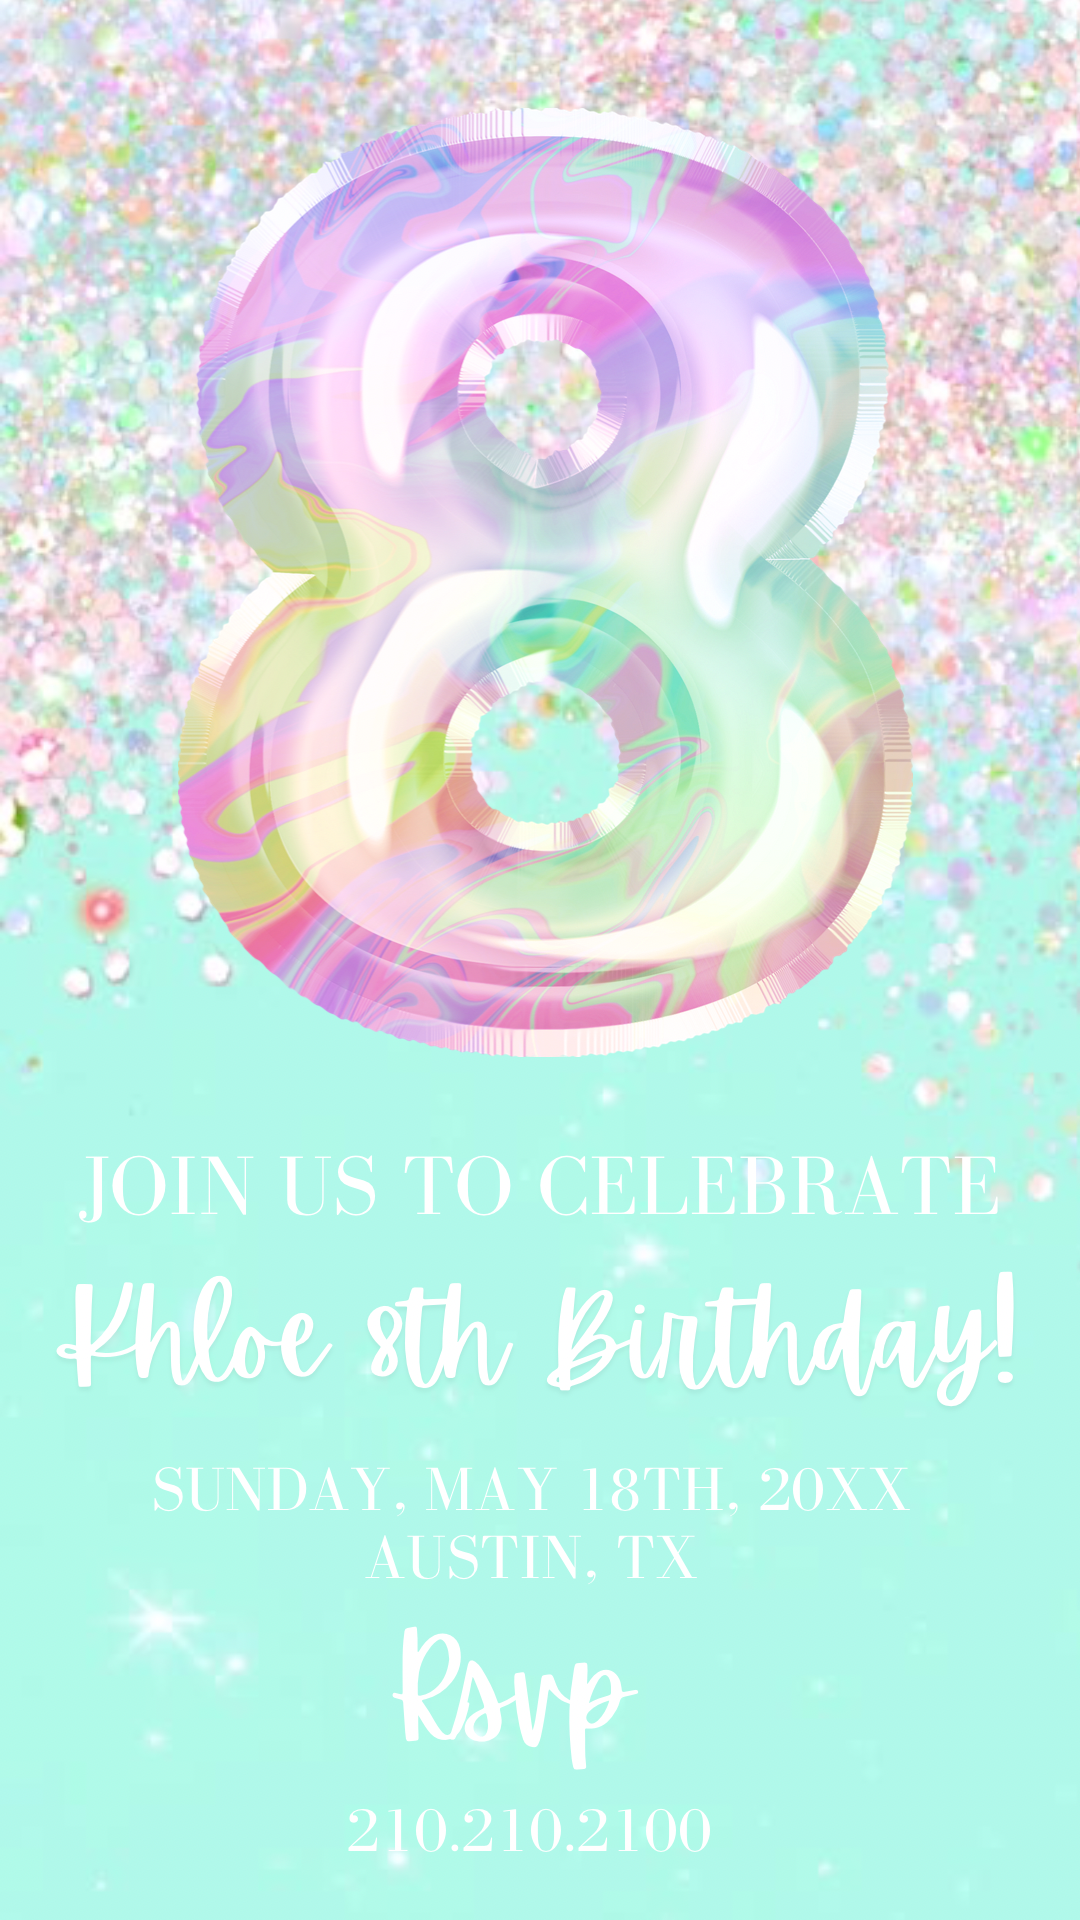 8th Birthday Glitter Video Invitation, Glitter Mint and Pink Birthday Invite